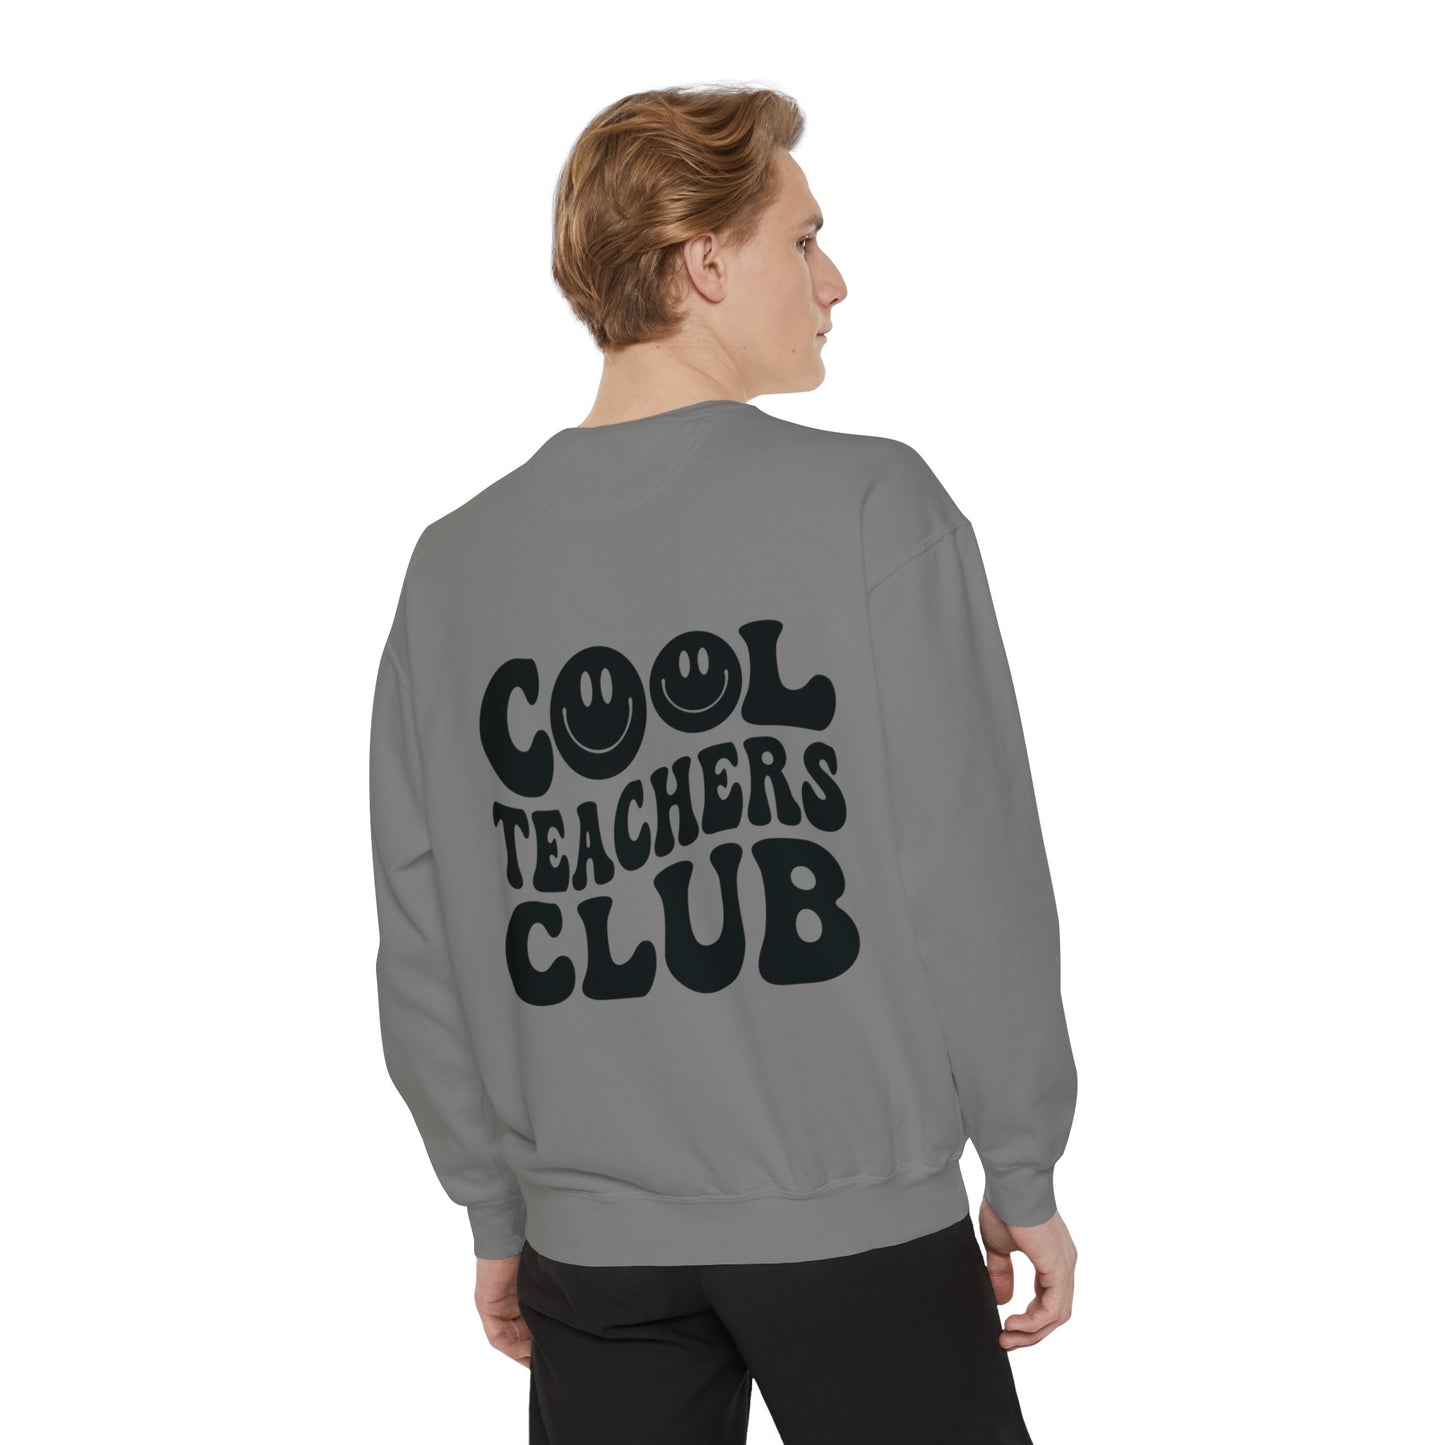 Cool Teachers Club (2 sided)